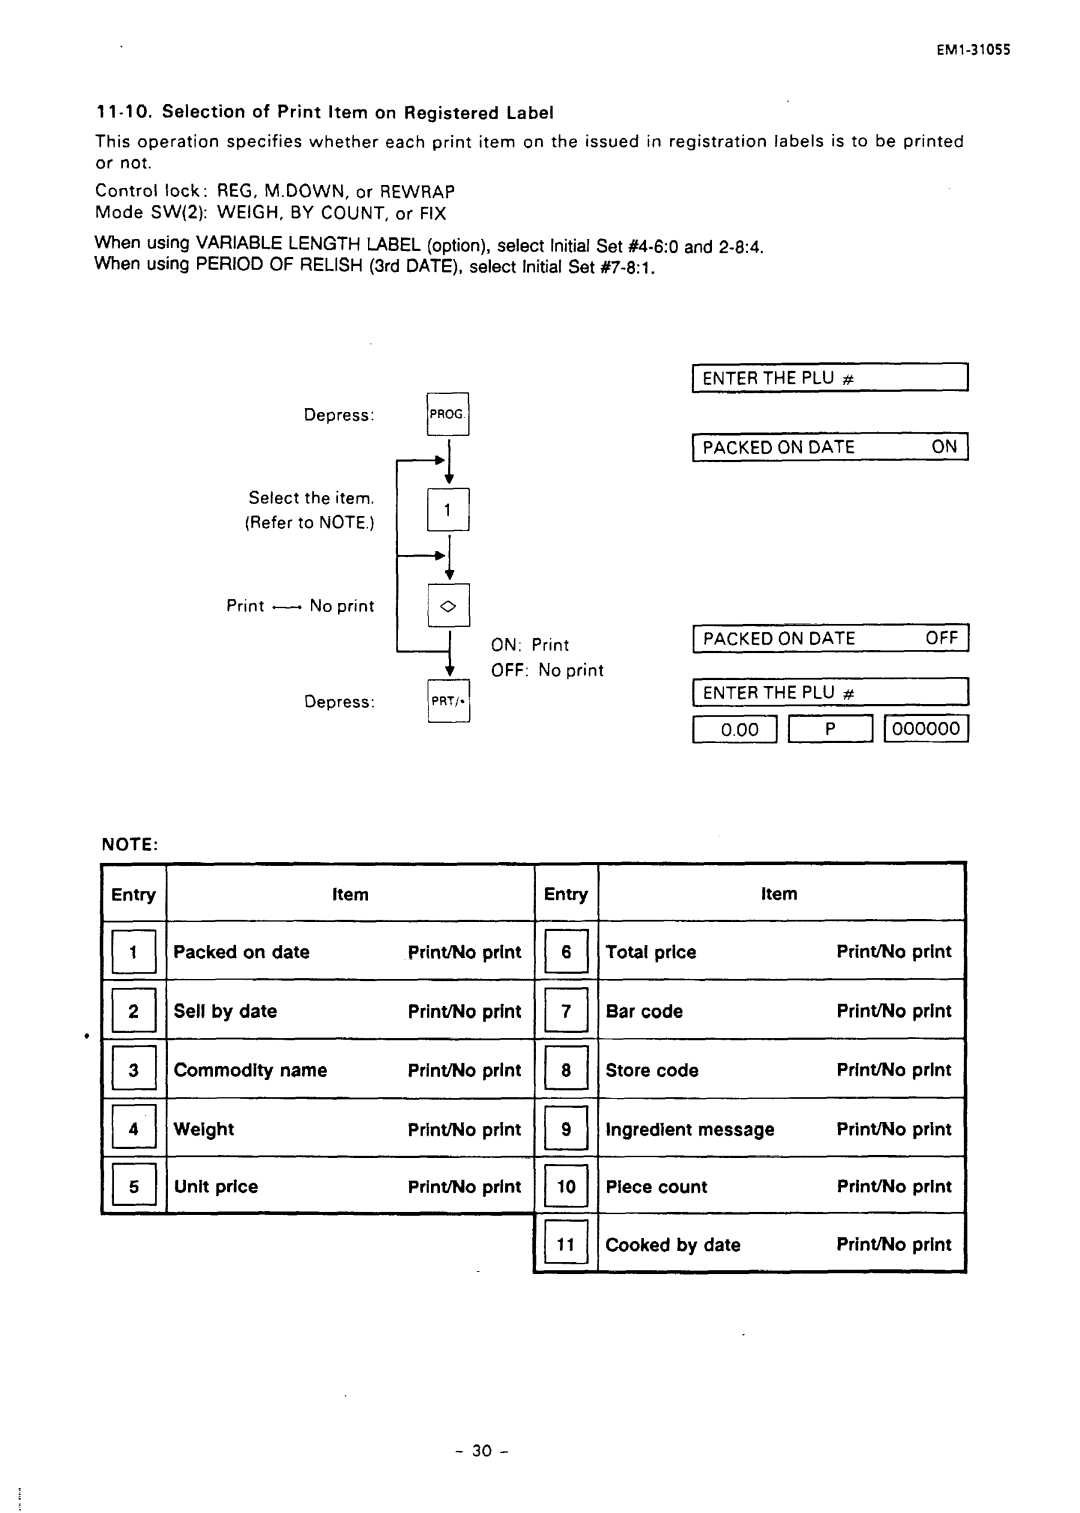 Toshiba EMl-31055, SL66 SERIES manual date 